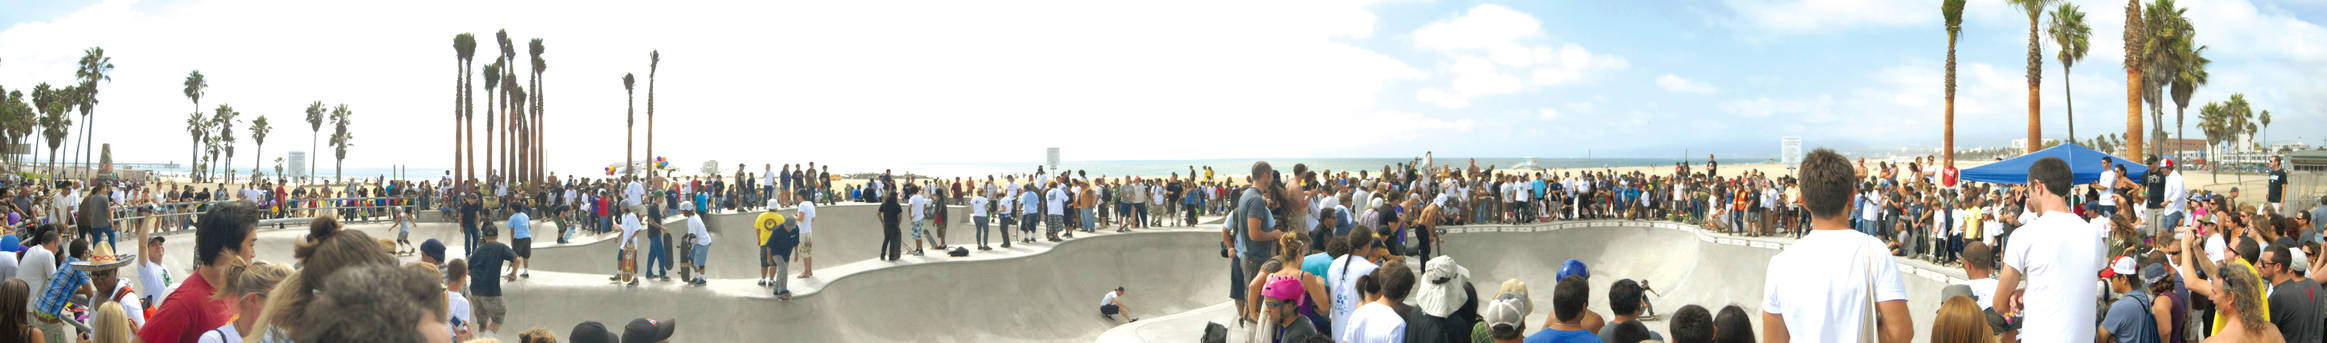 Venice Skate Park Opening Day